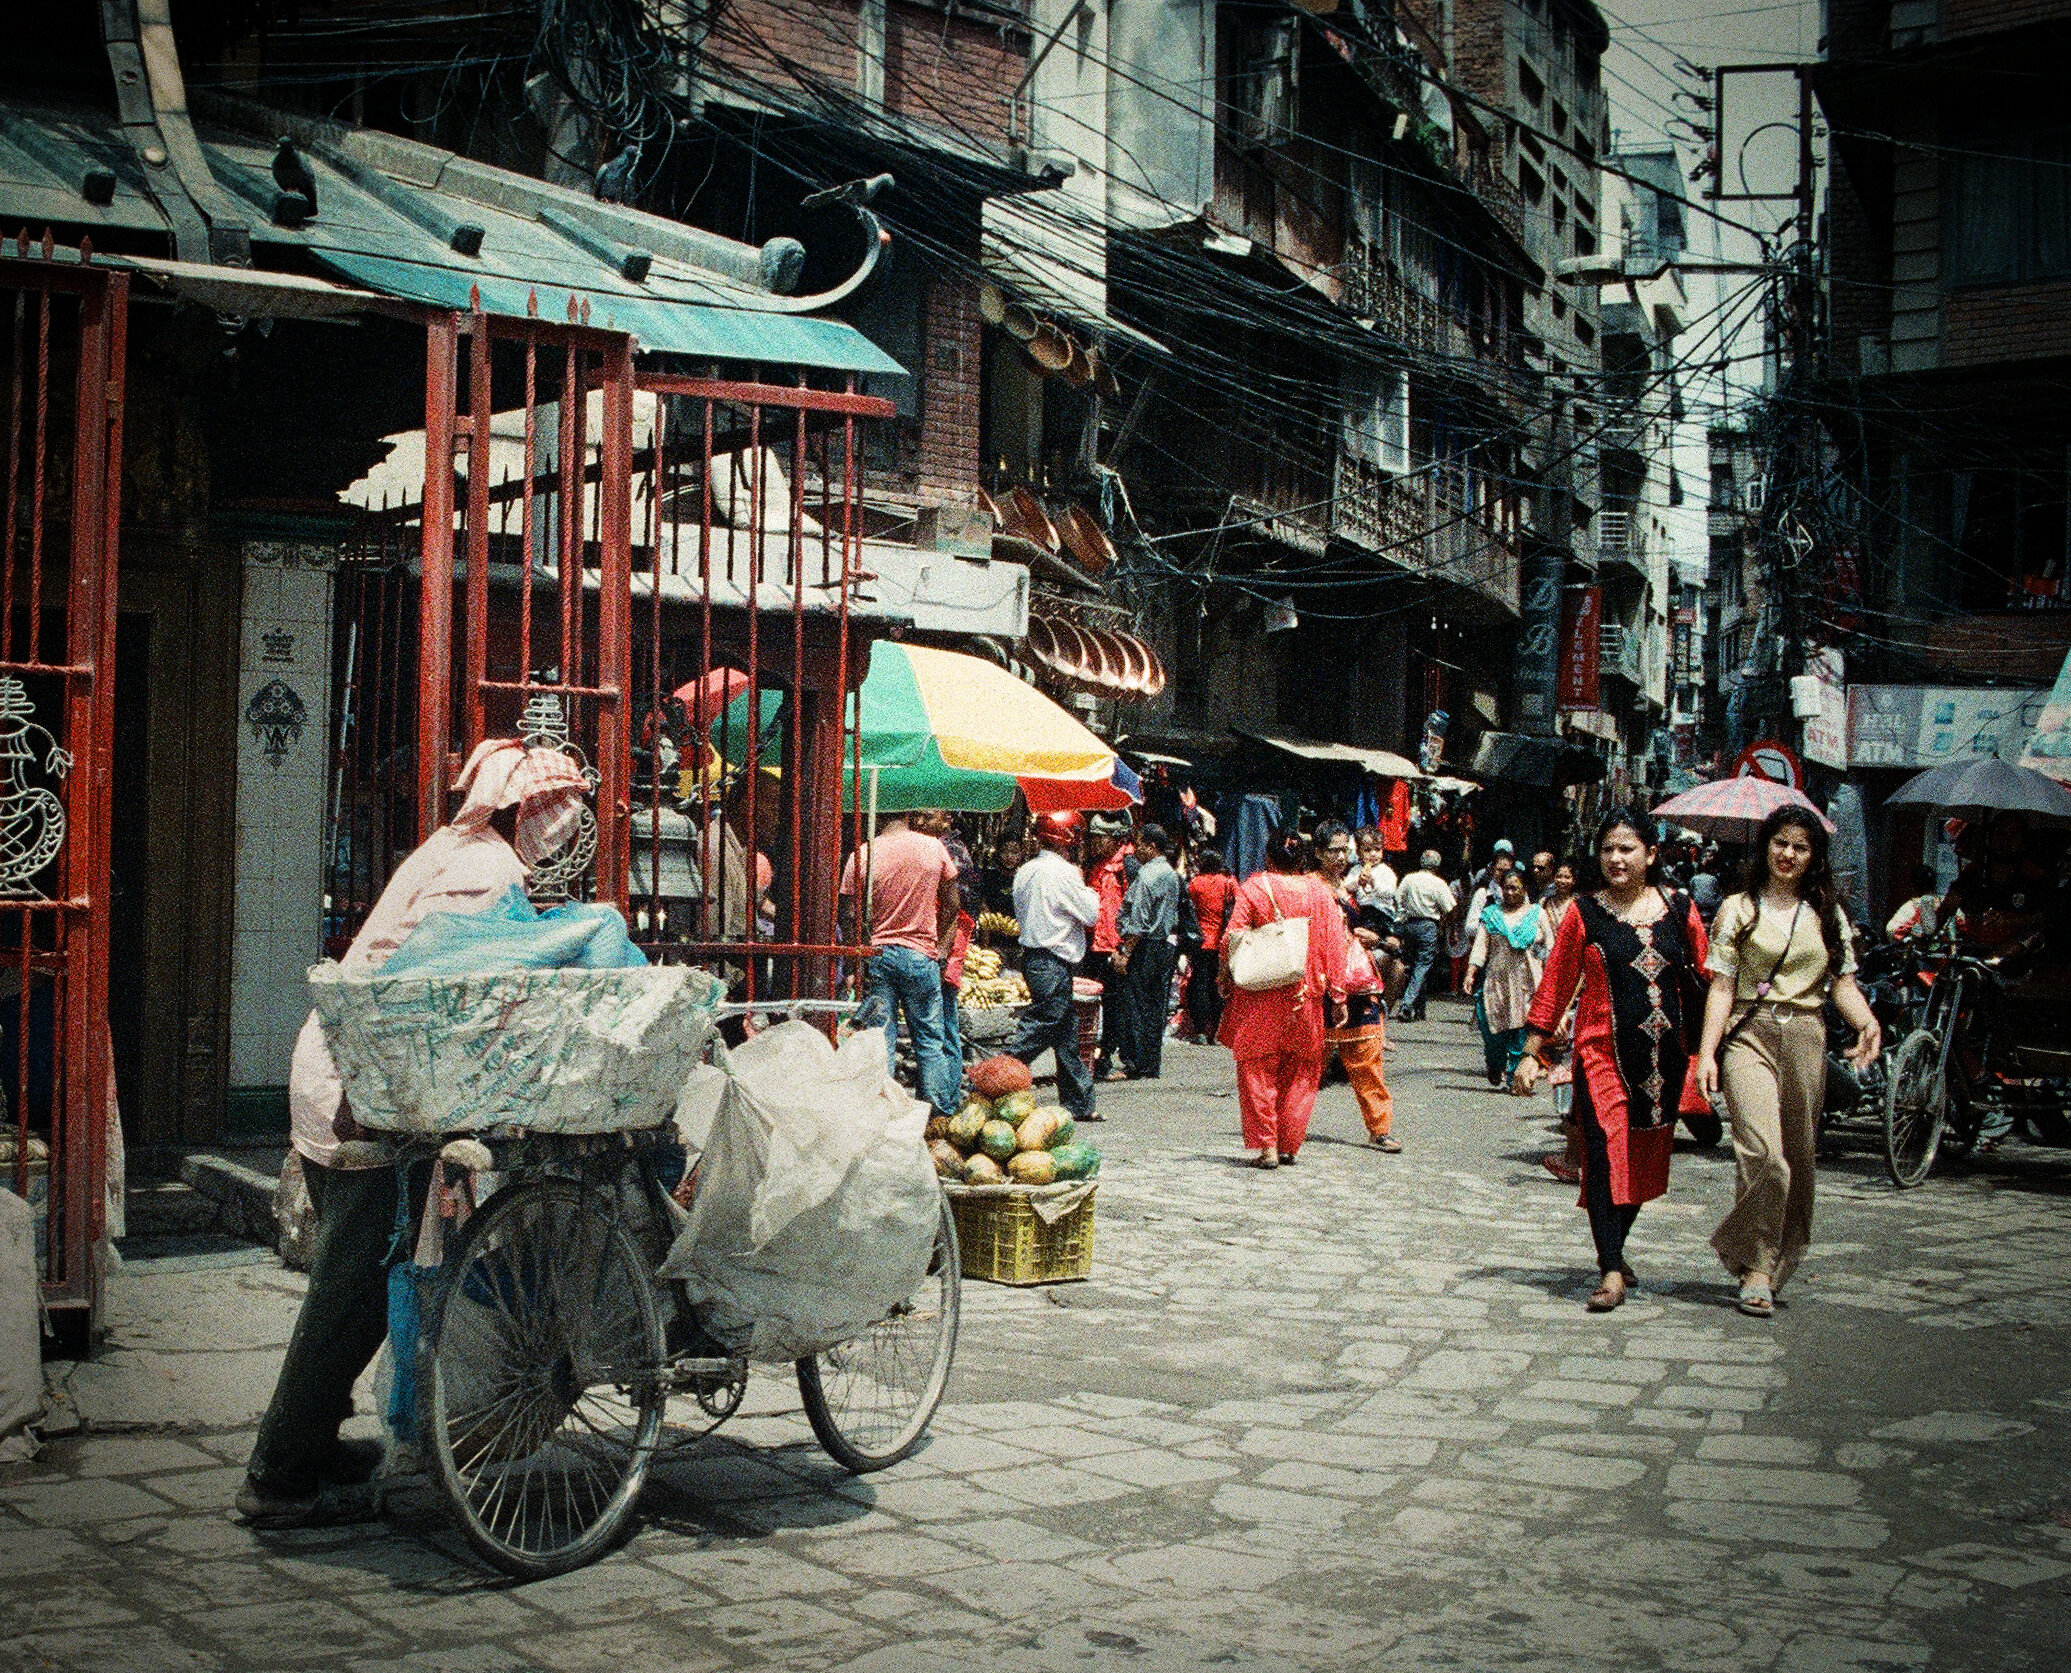  Asan street market, Kathmandu, Nepal, 2018 